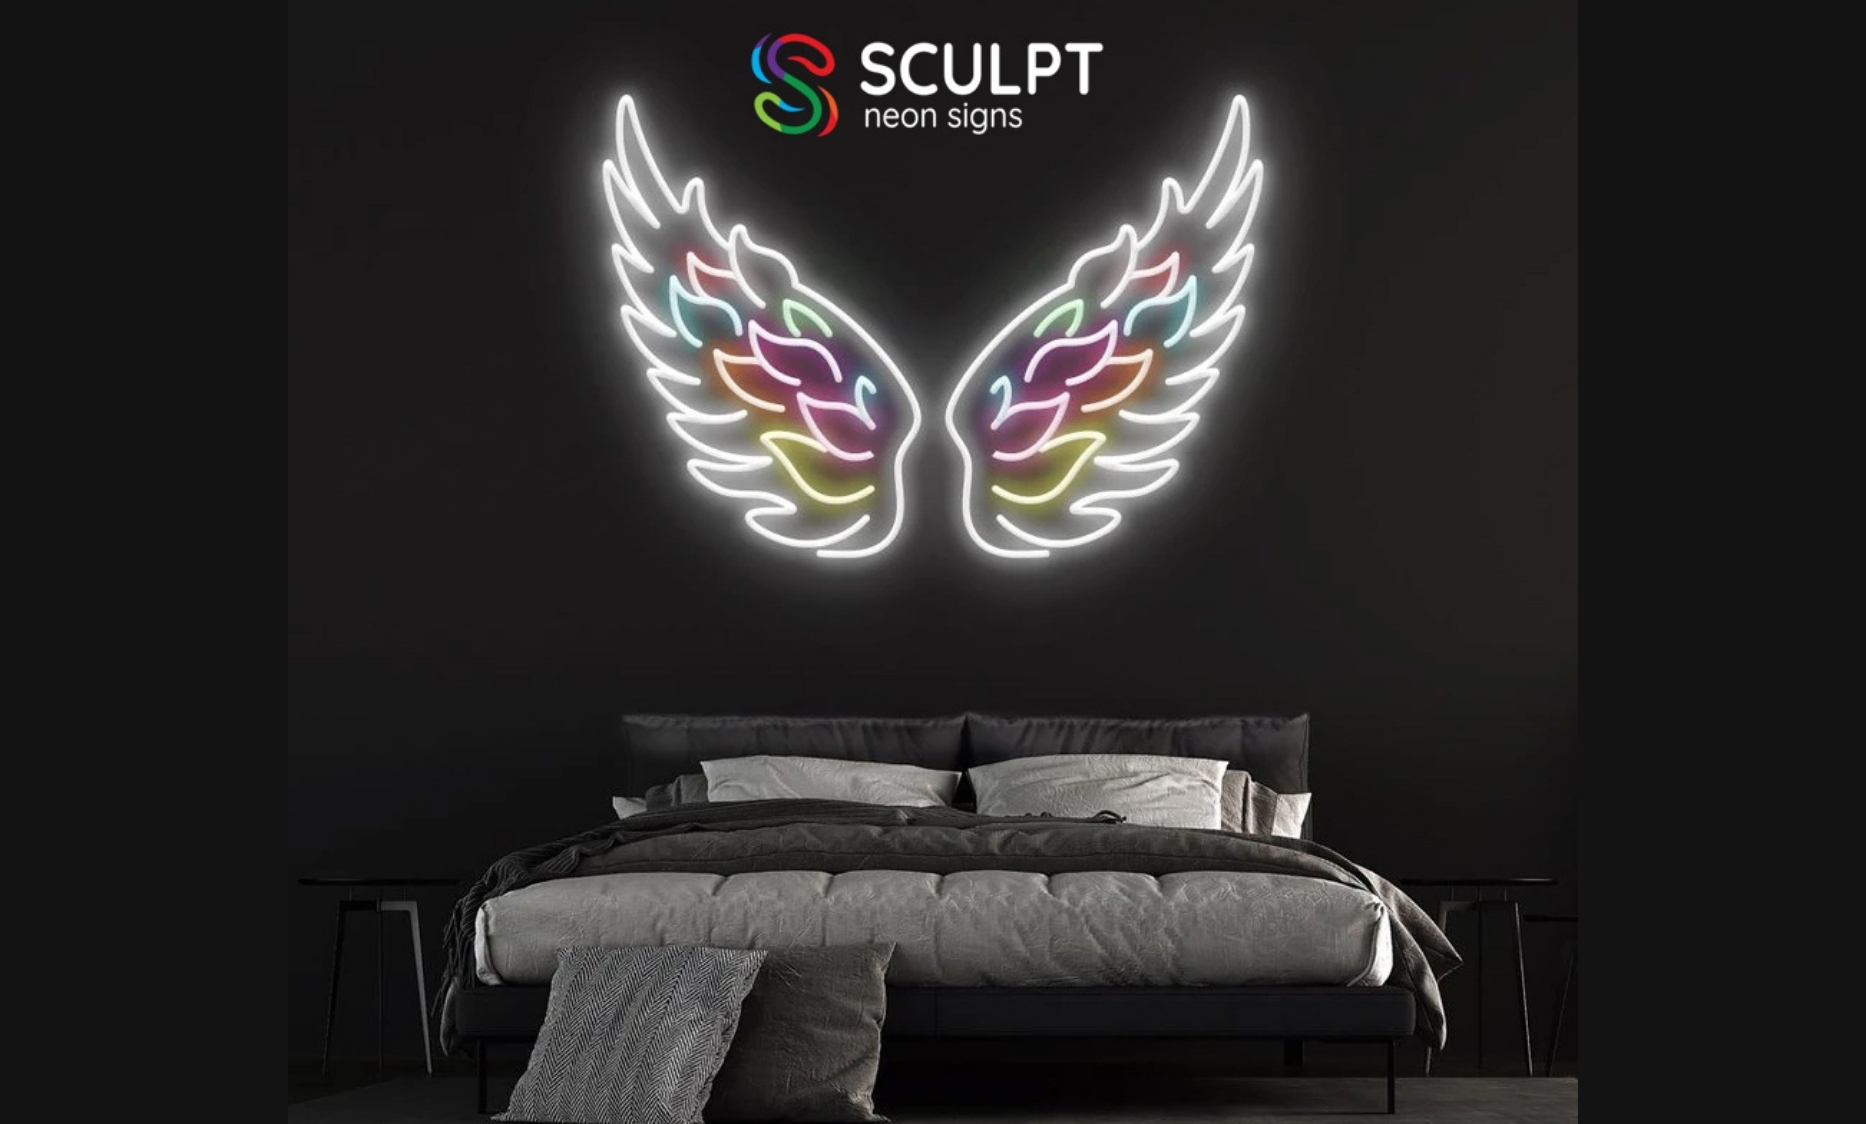 Sculpt Neon Signs Helping Enhance Your Interiors - Digpu News